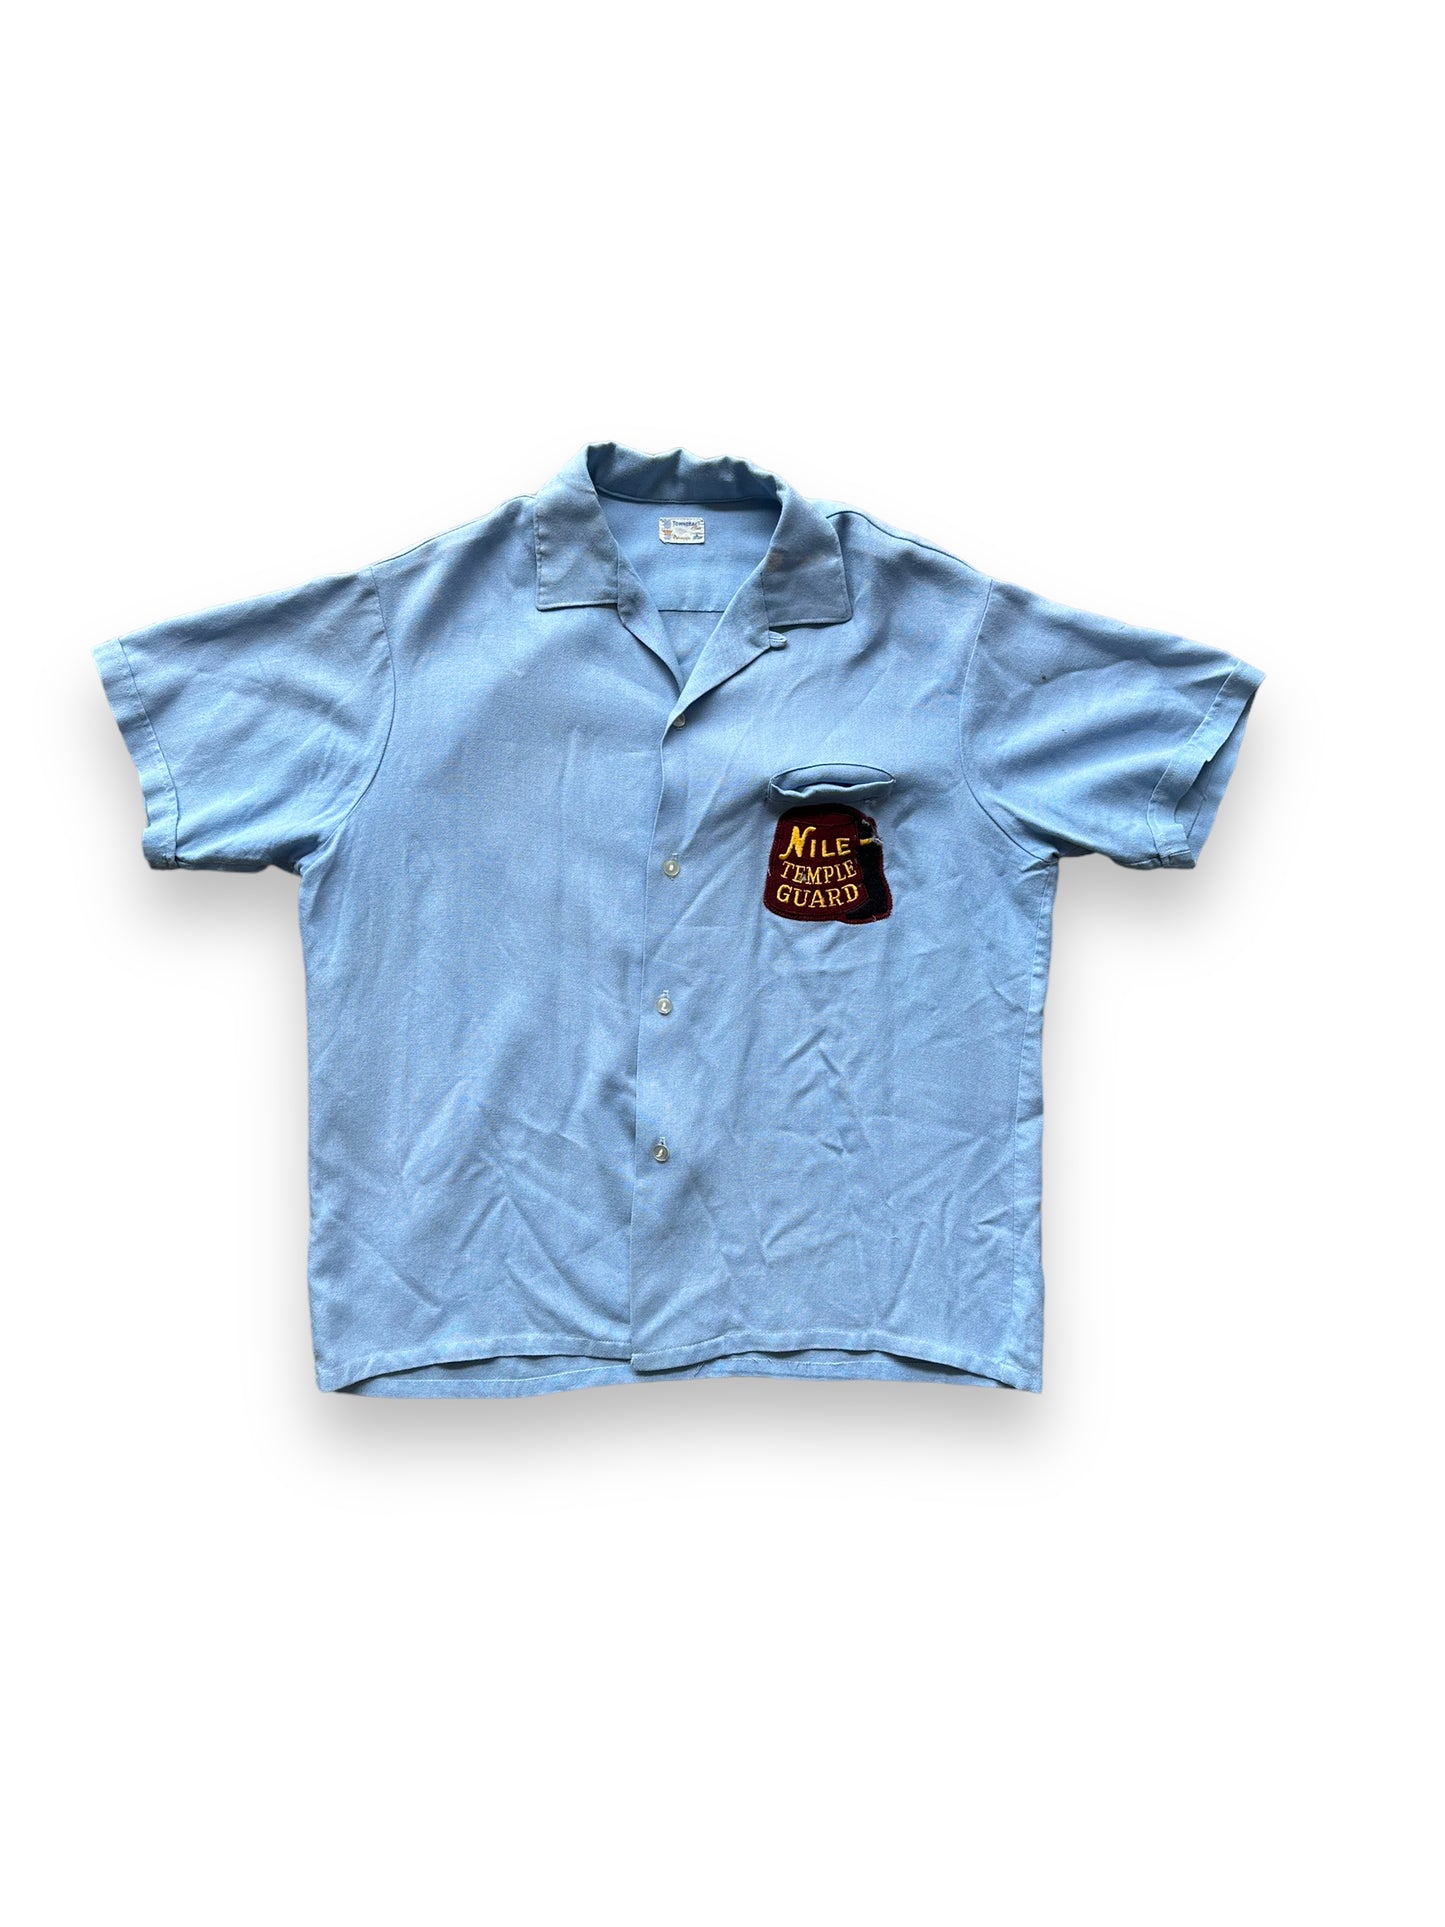 Front of Vintage "Nile Temple Guard" Chainstitched Bowling Shirt SZ L | Vintage Bowling Shirt Seattle | Barn Owl Vintage Seattle